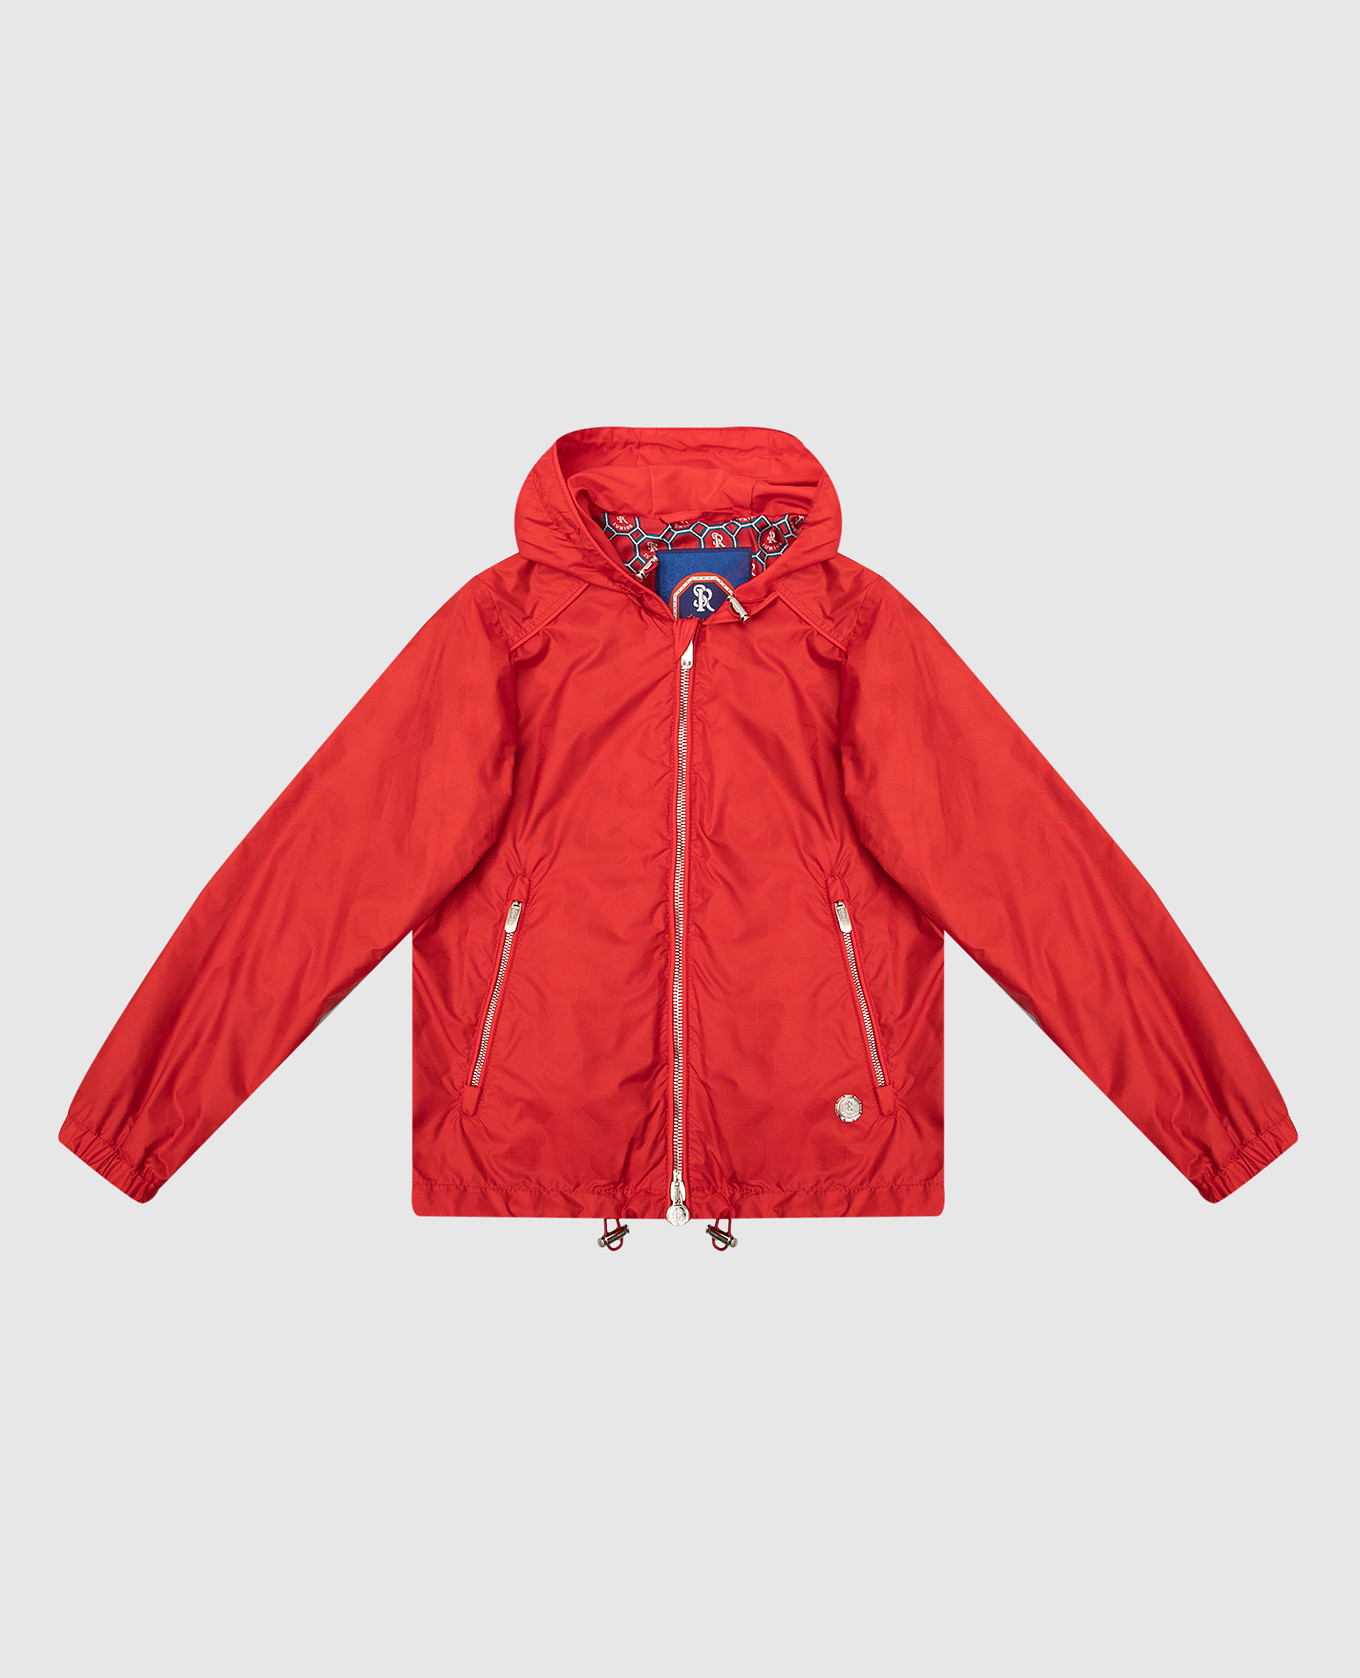 Children's red jacket in a pattern